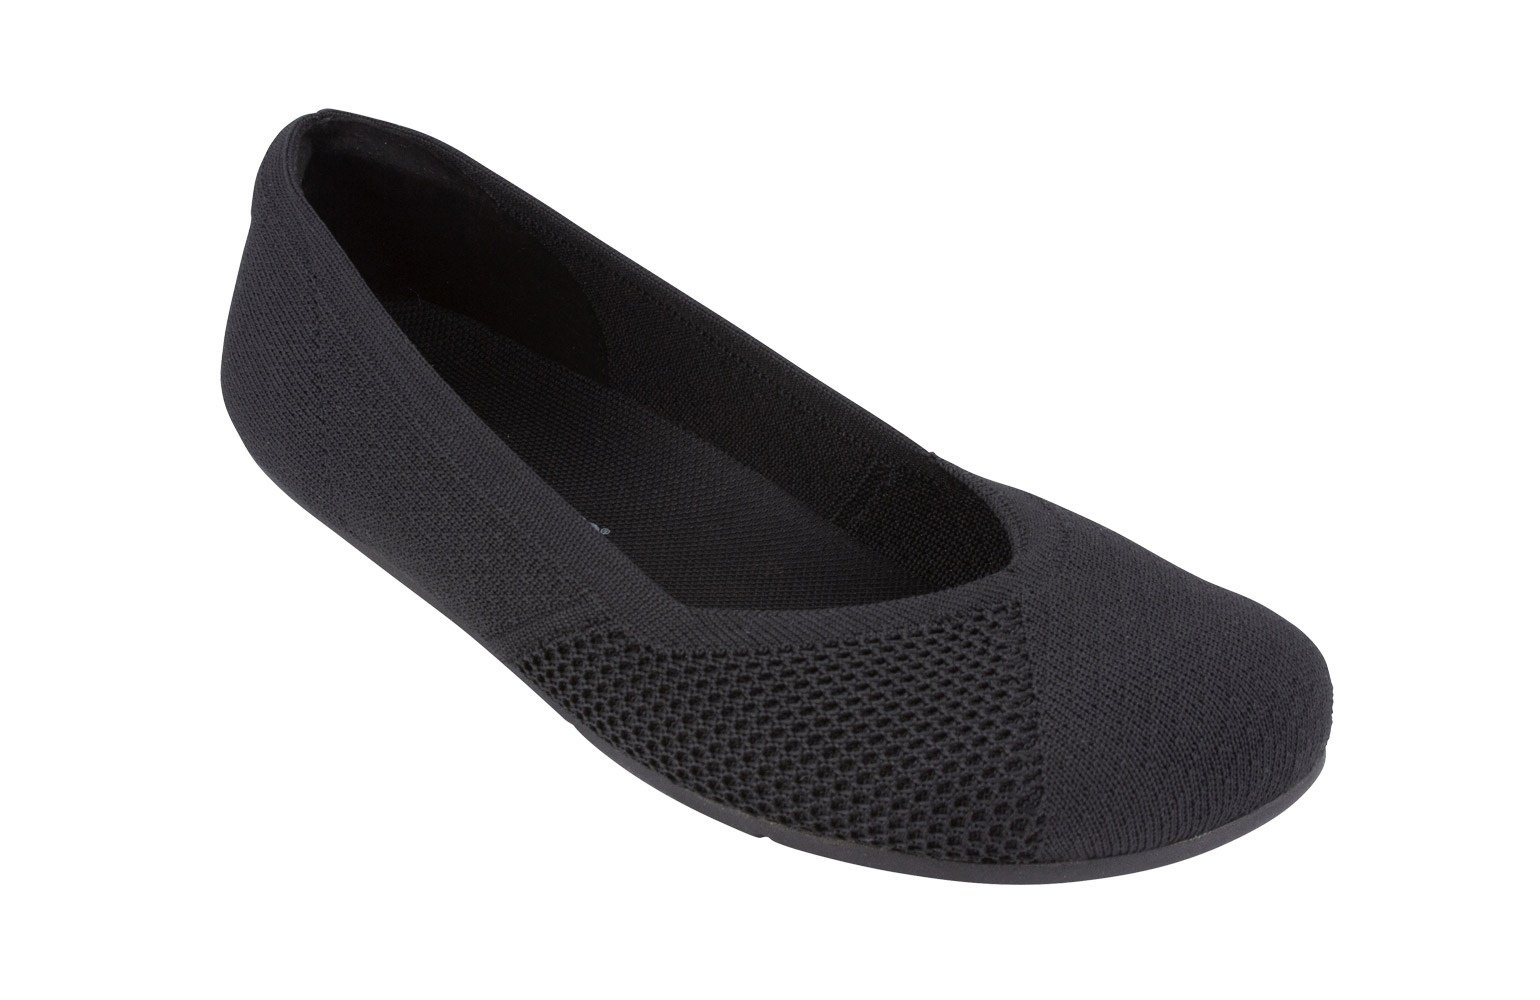 Xero Shoes, Phoenix Knit - PHX-KBLK - black, dames, maat 38 eu